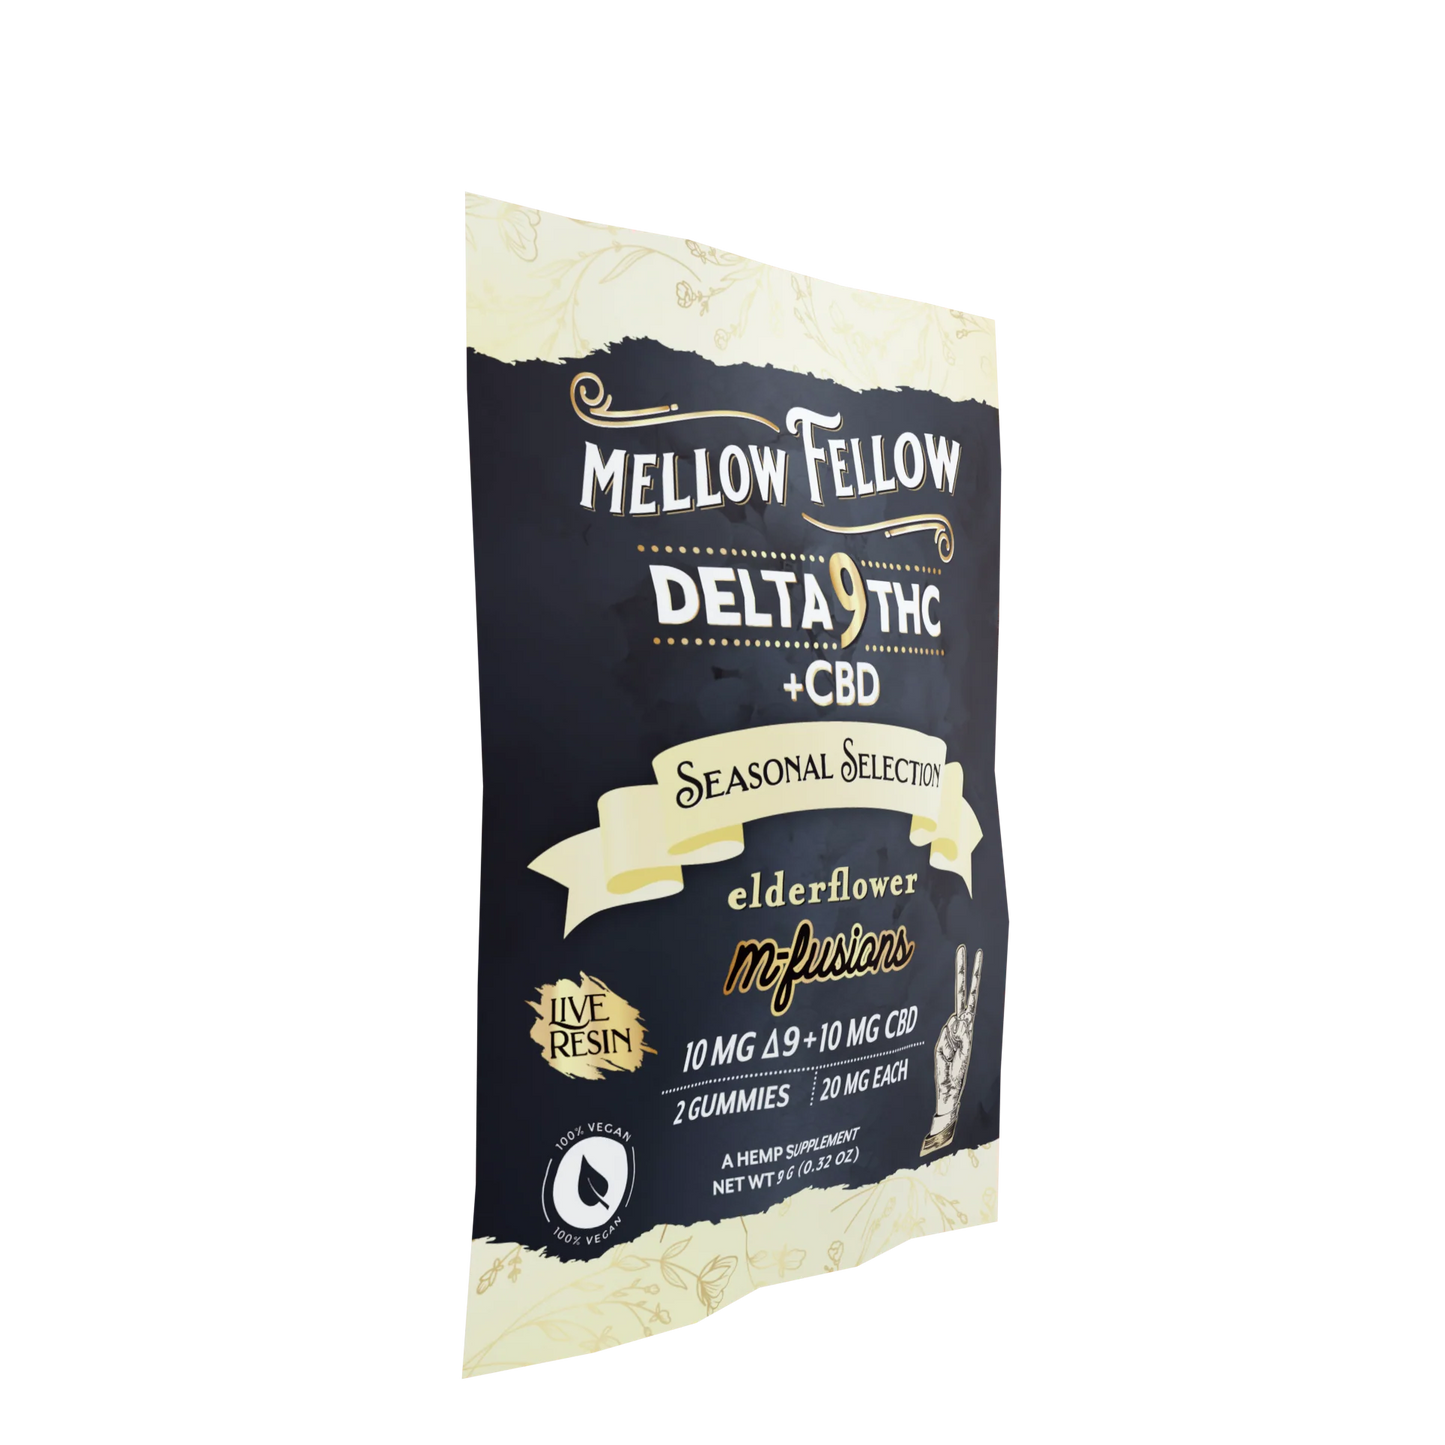 Mellow Fellow Live Resin Infused Edibles - 2cnt 40mg Delta 9 THC & CBD - Elderflower (Seasonal Selection) Best Sales Price - Edibles